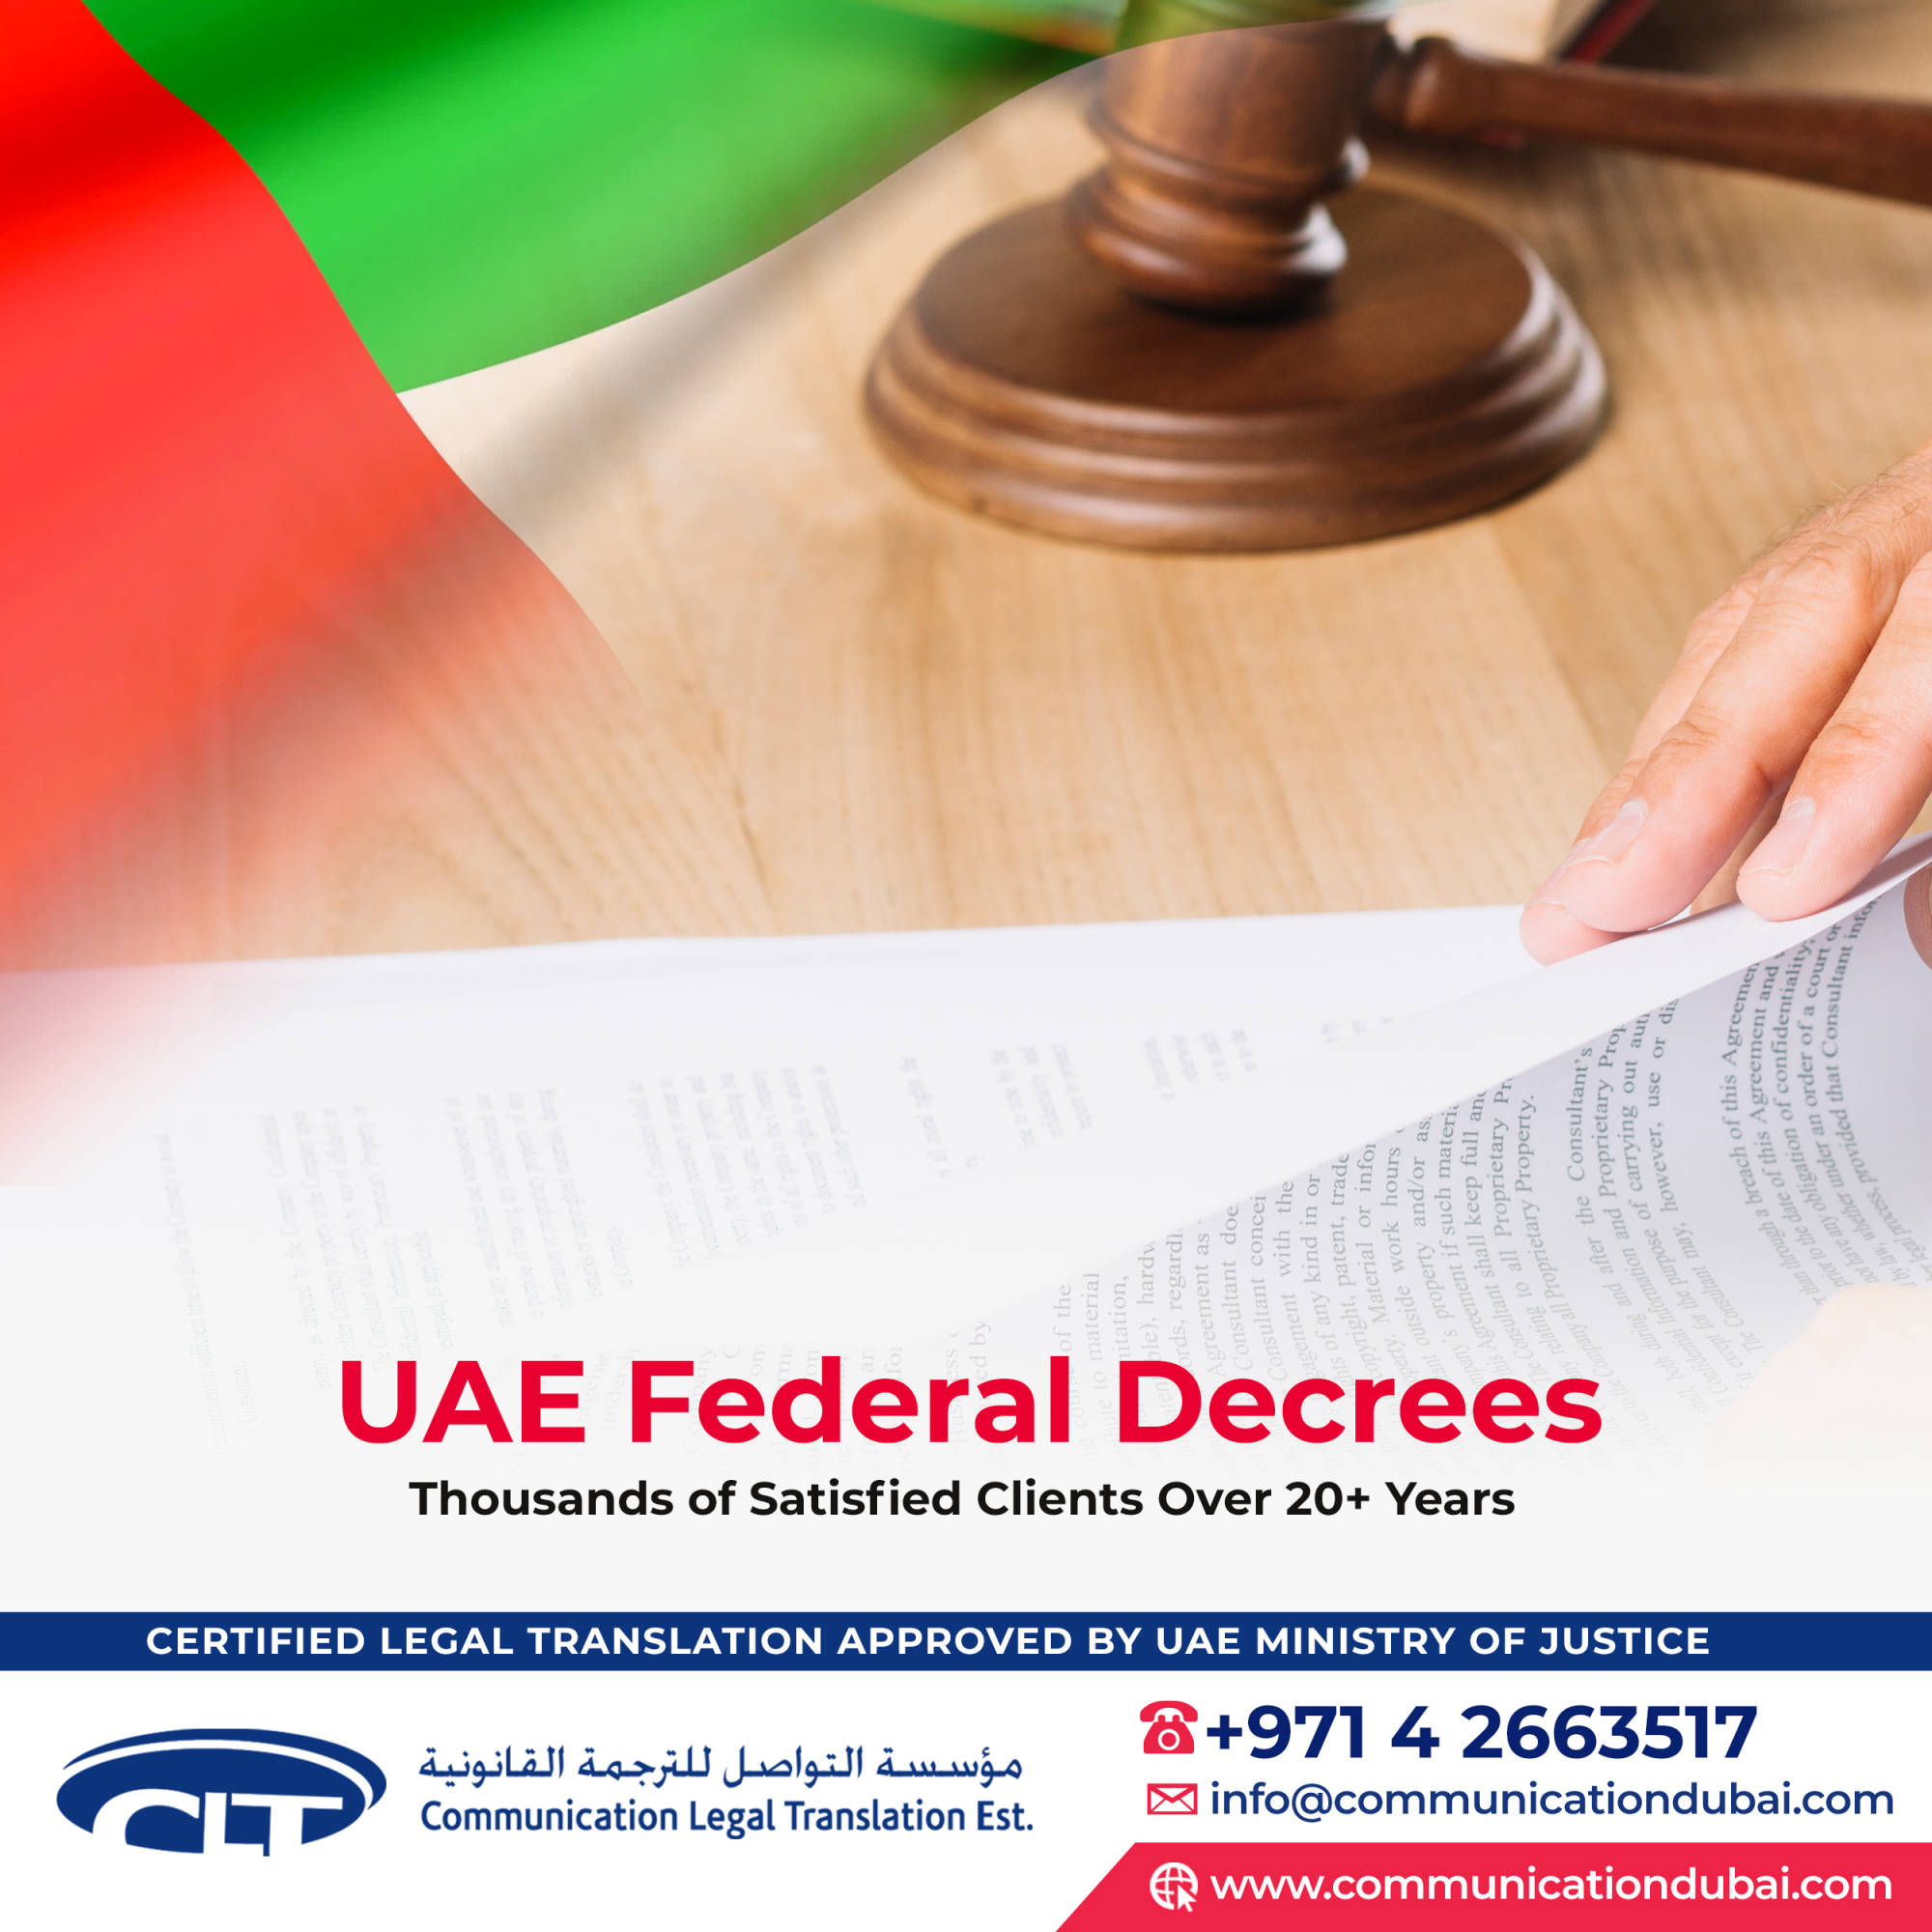 UAE Federal Decrees